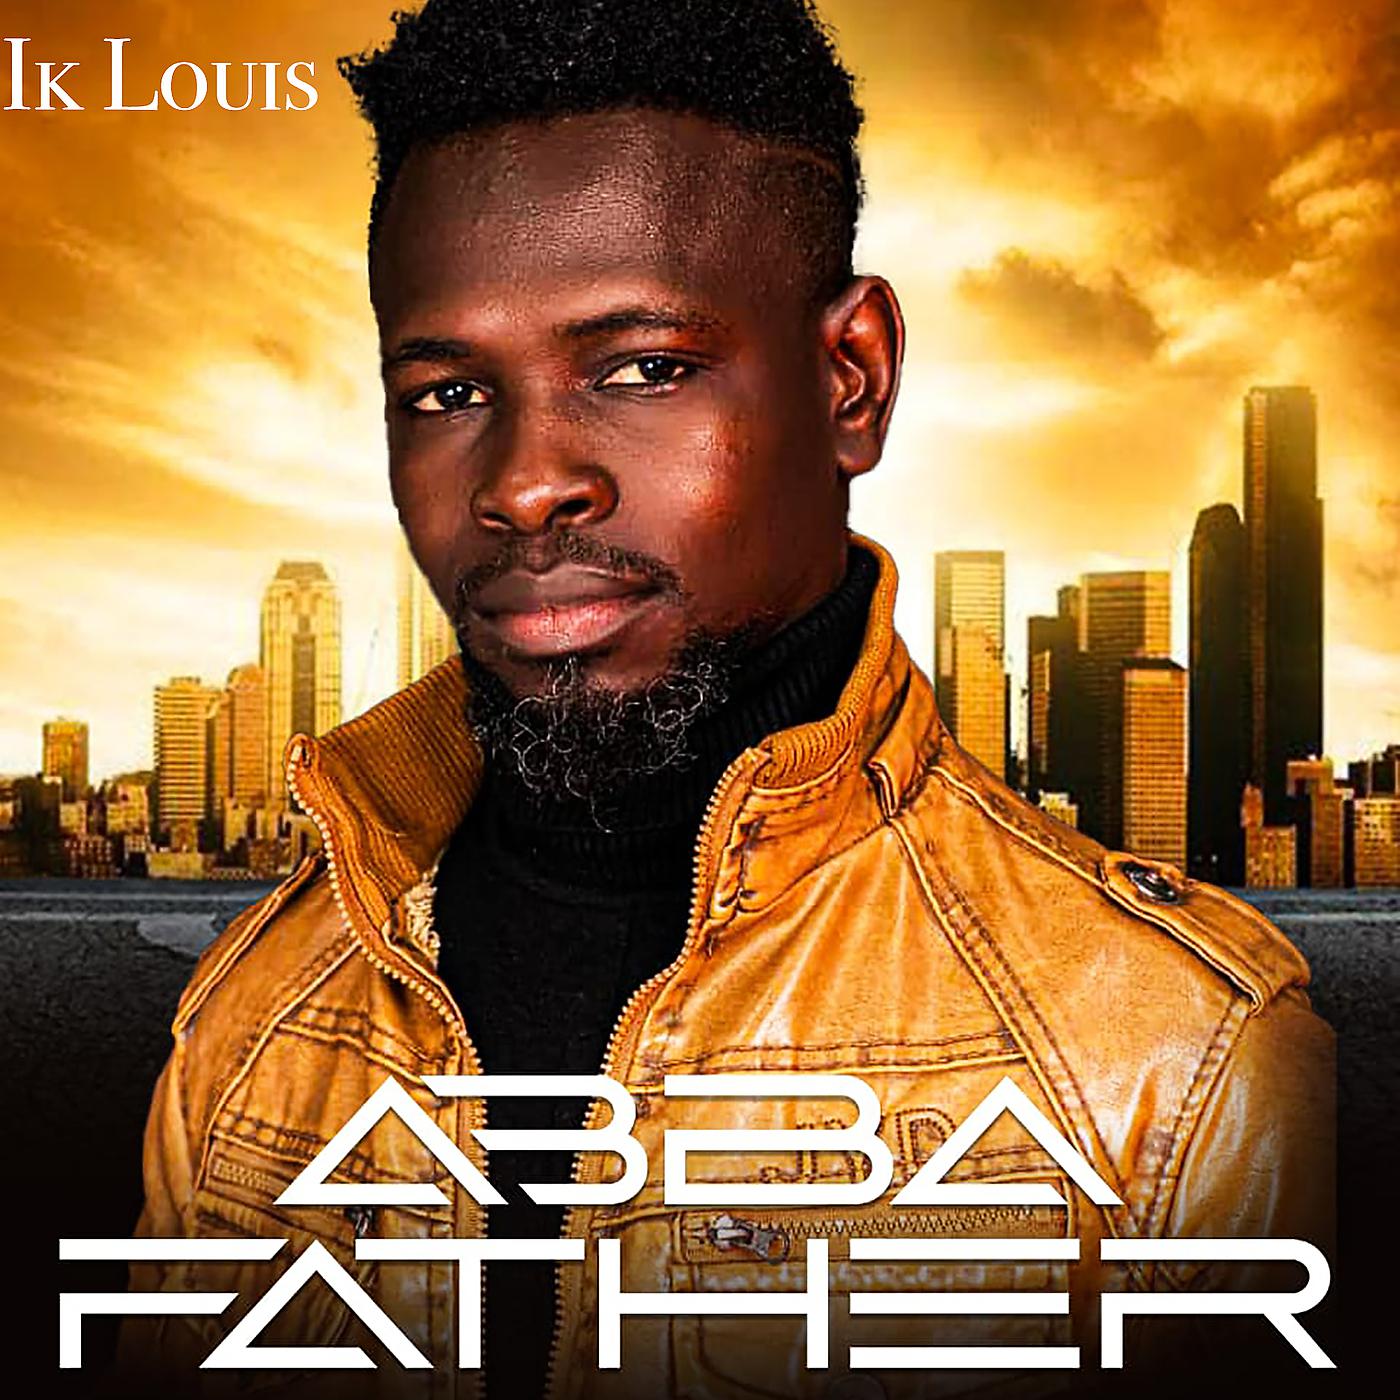 Постер альбома Abba Father